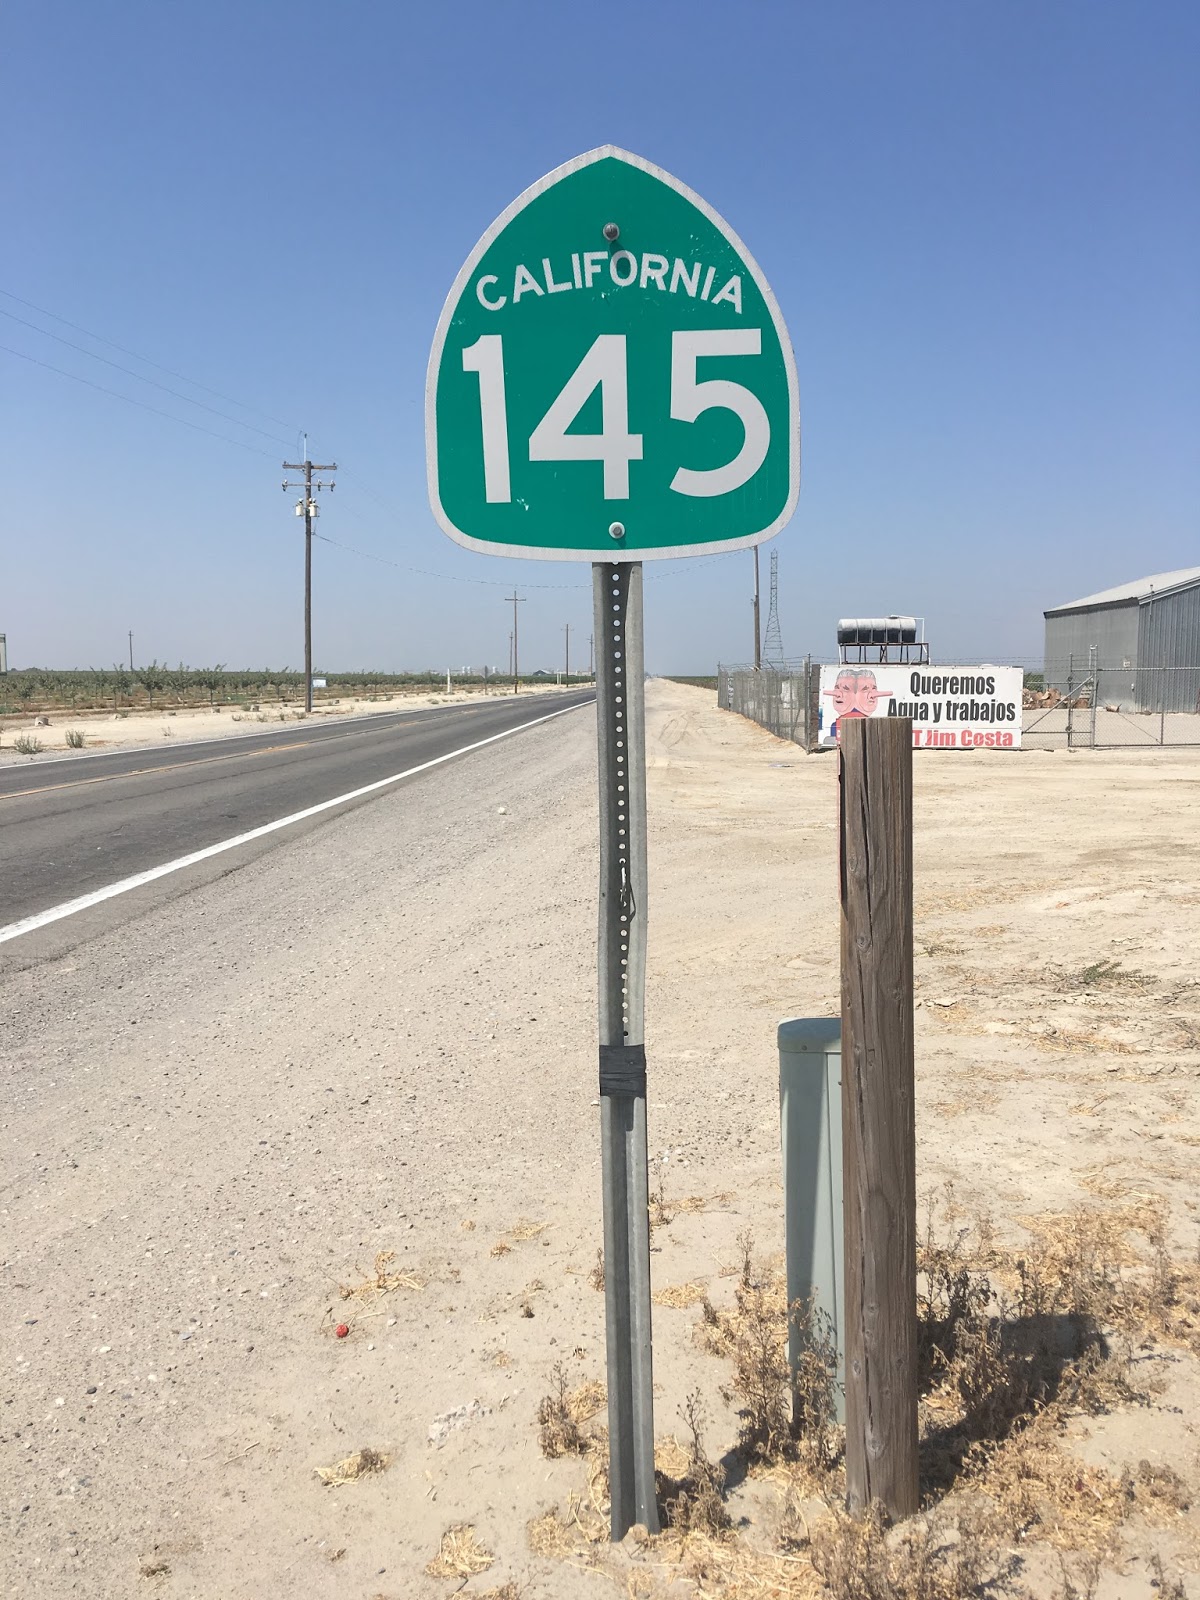 California State Route 145